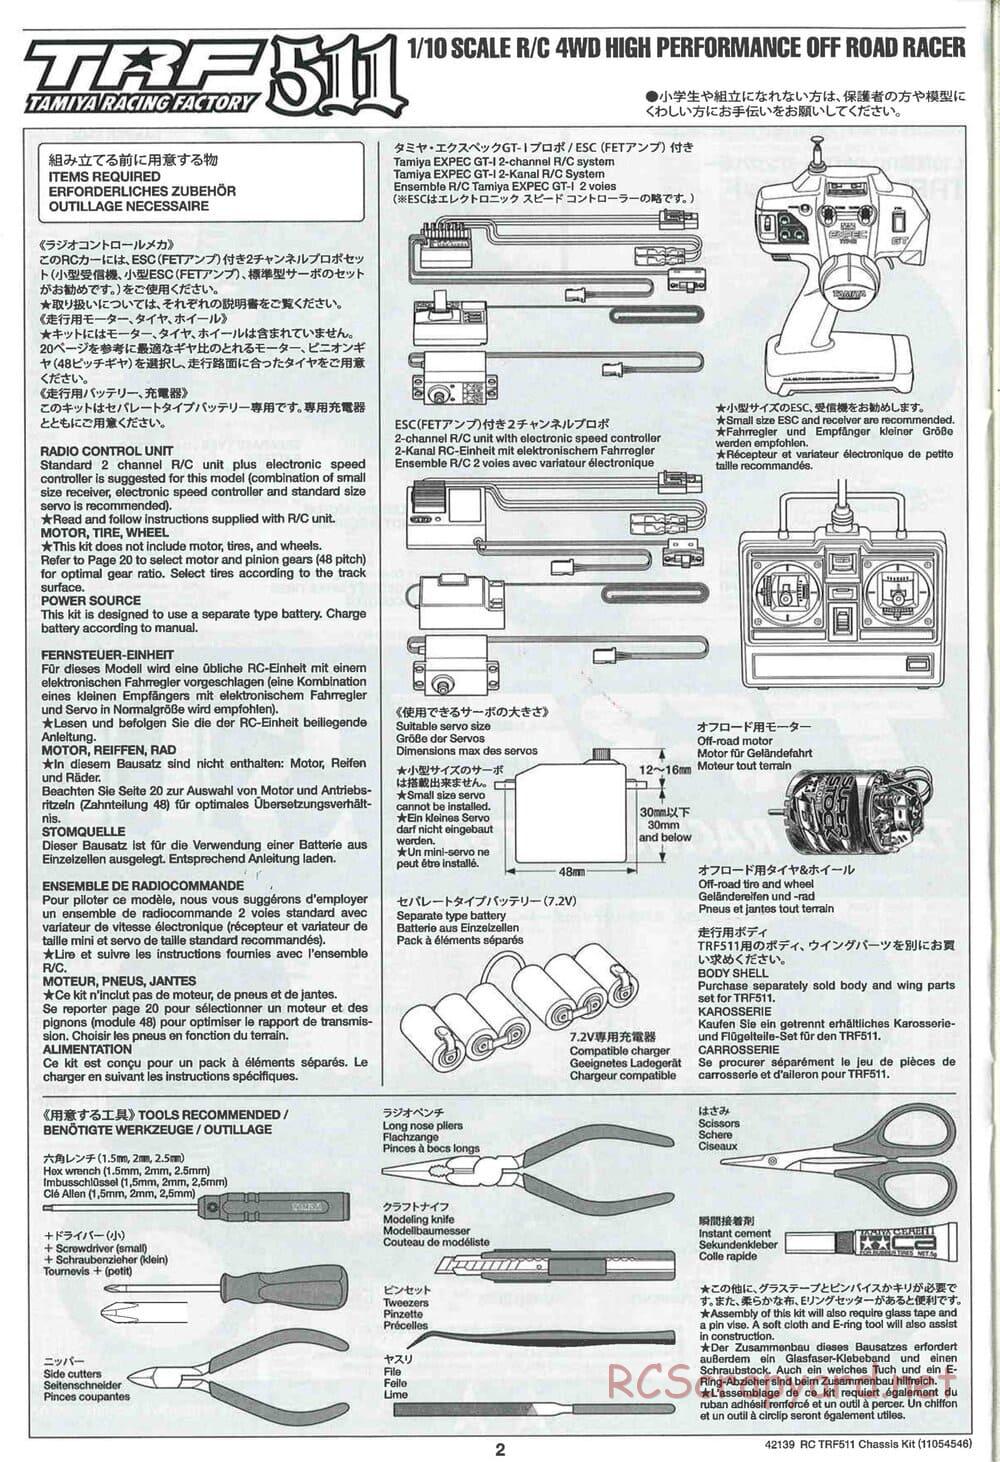 Tamiya - TRF511 Chassis - Manual - Page 2